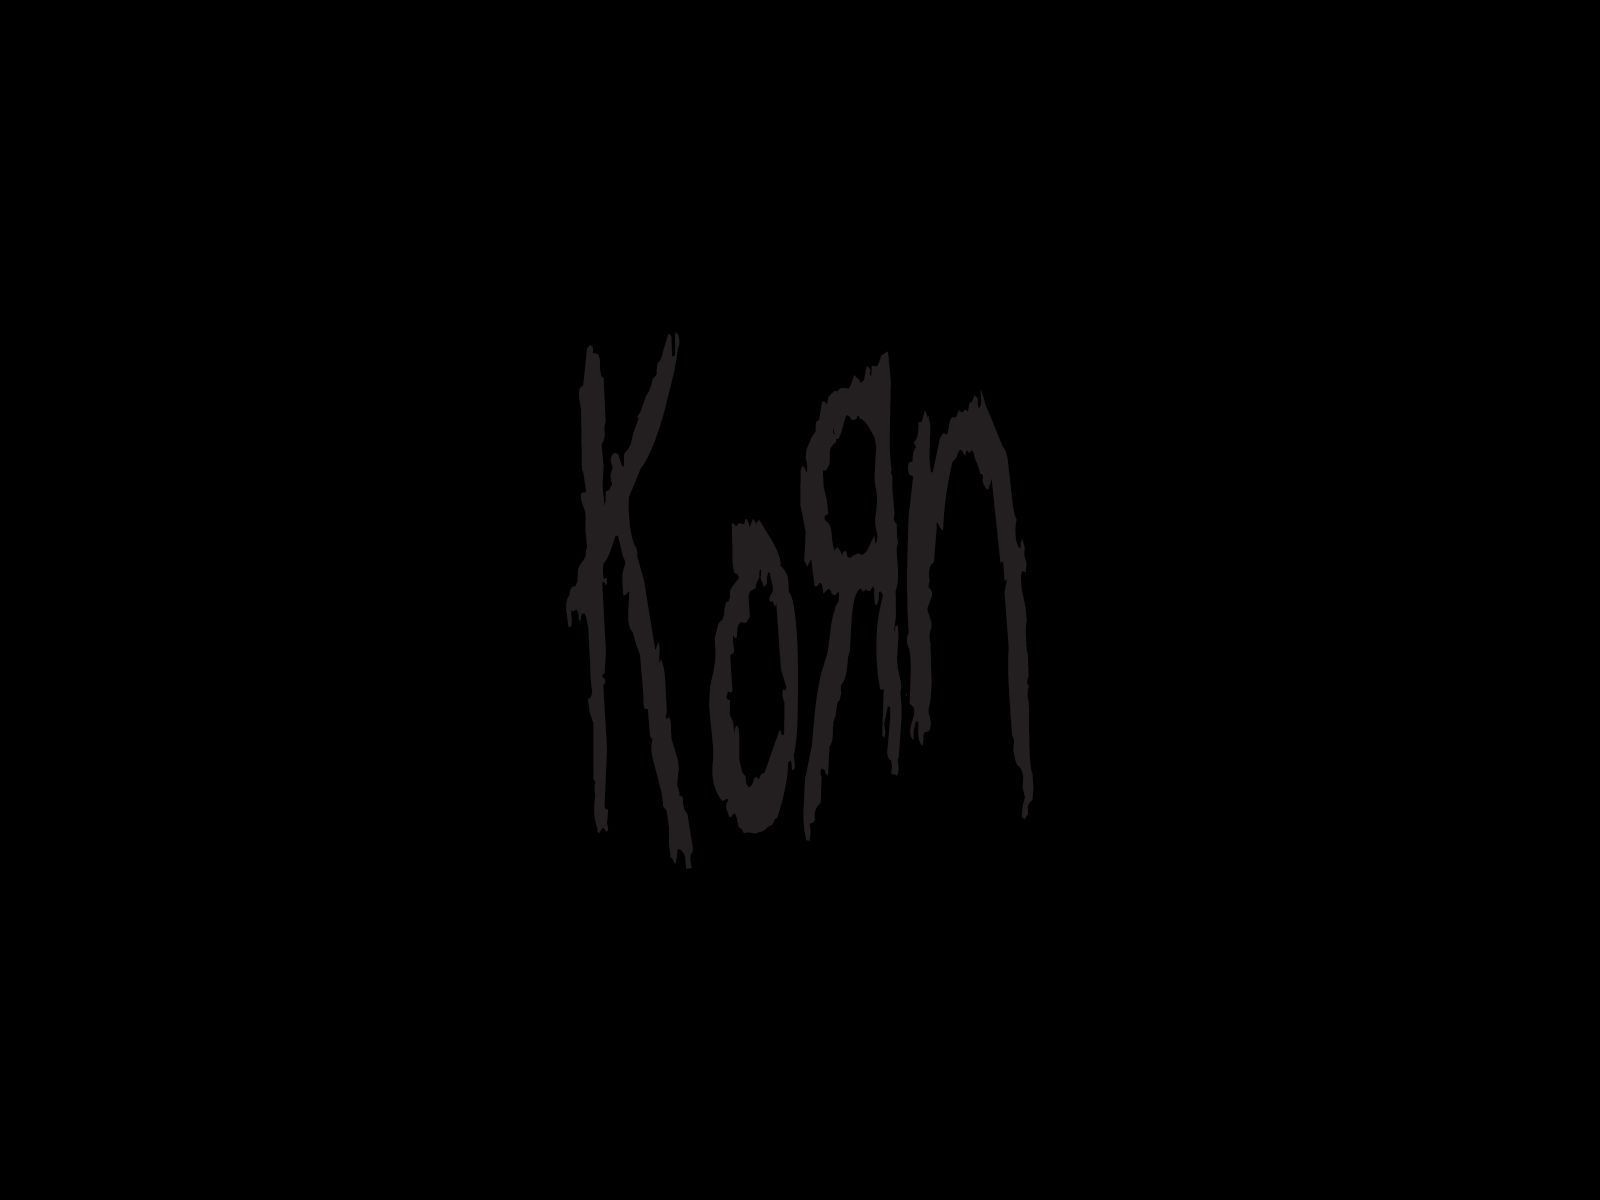 Korn logo and wallpaper | Band logos - Rock band logos, metal ...